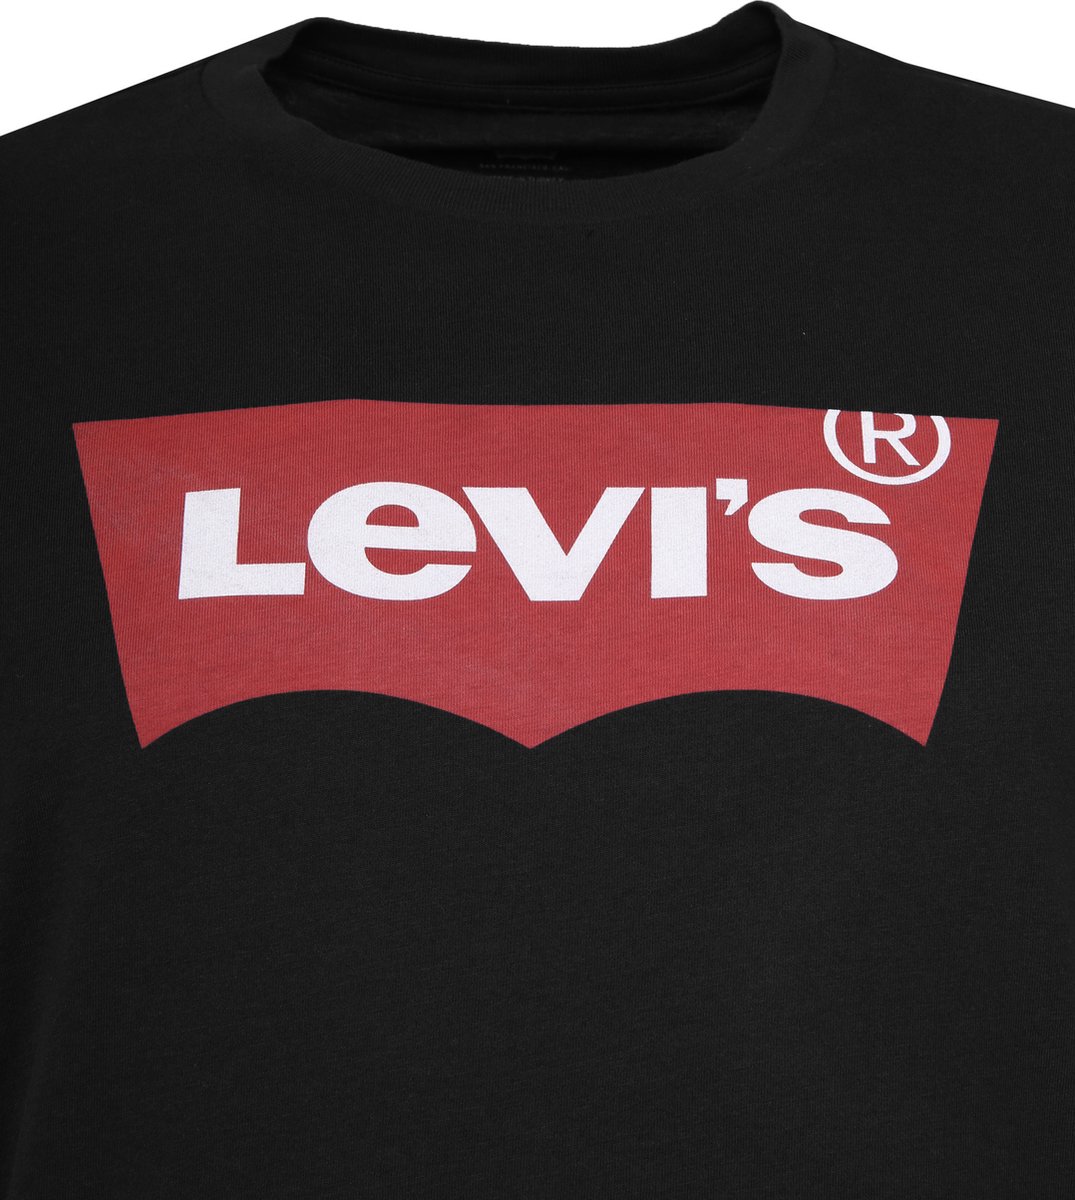 schedel Vijftig Distributie Levi's T-shirt, Zwart_M, maat M | bol.com